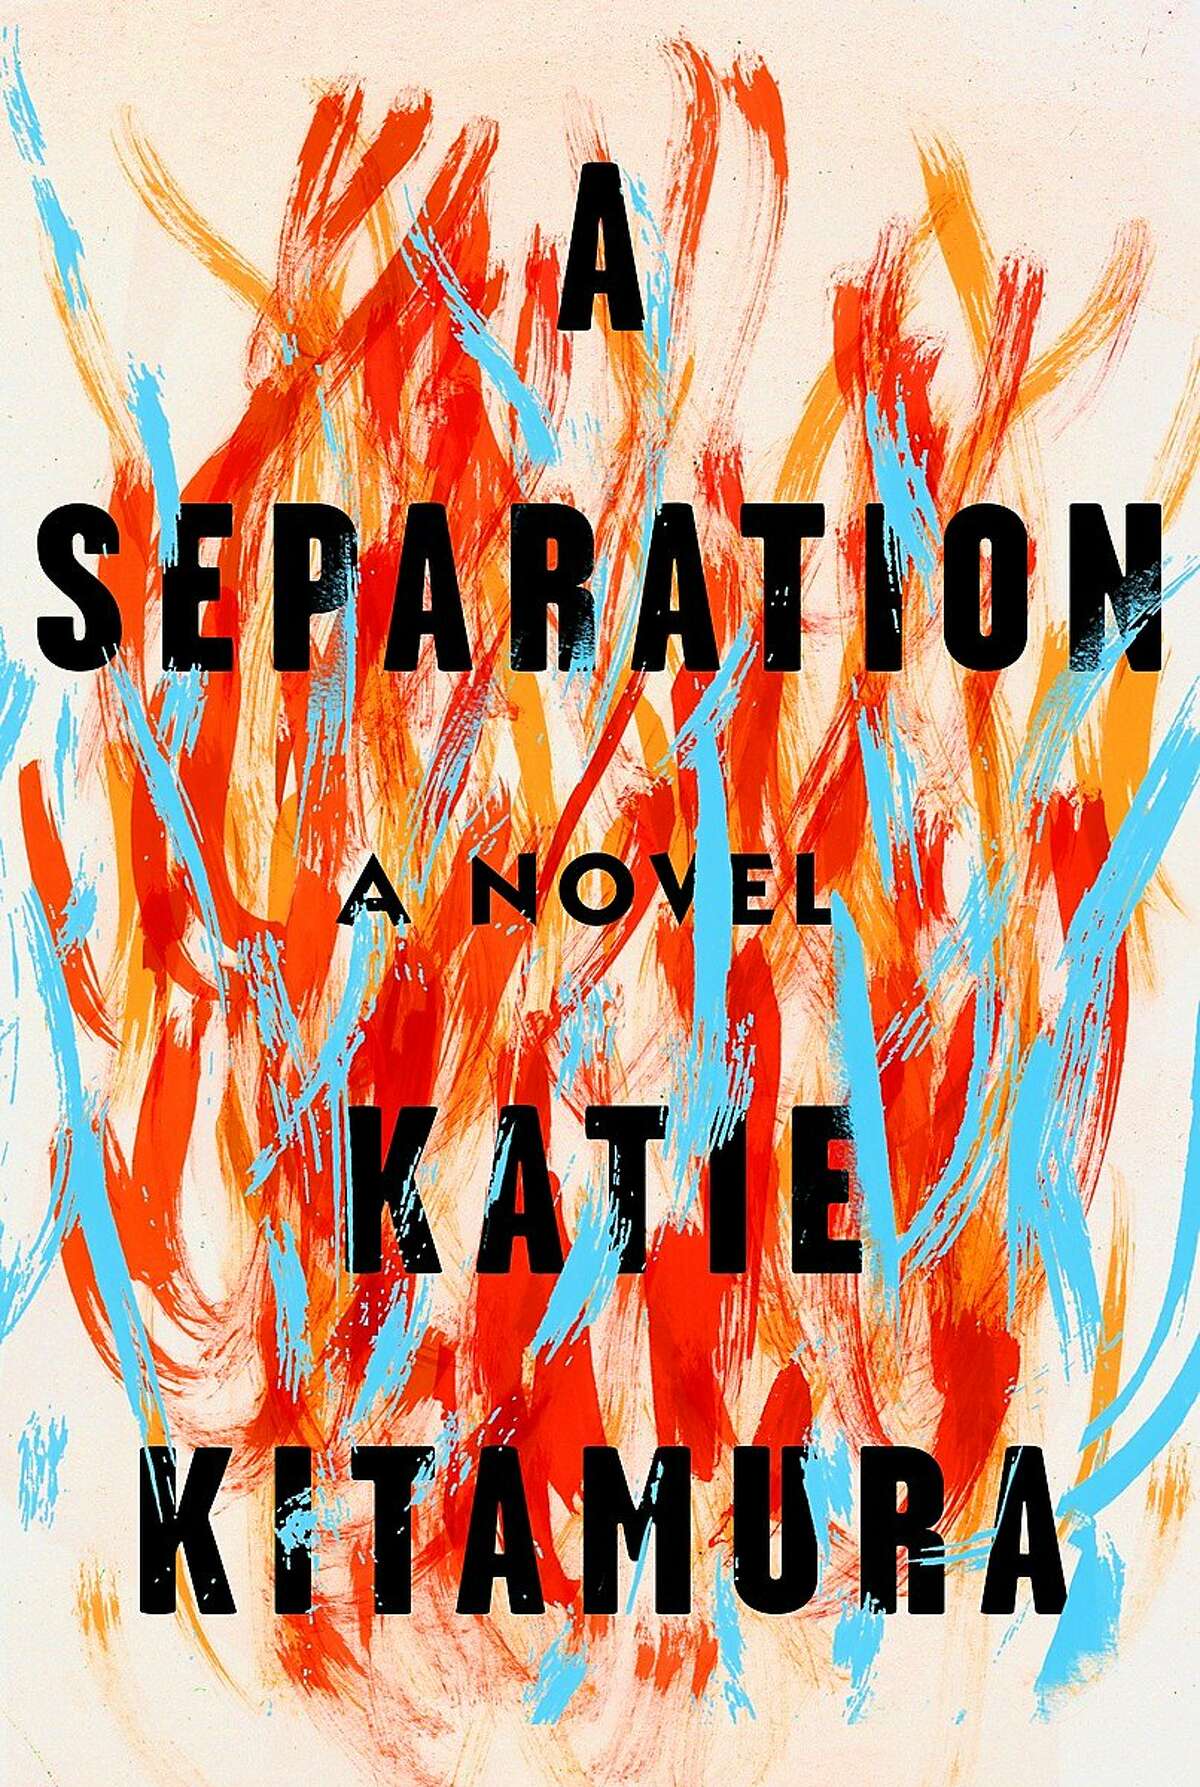 "A Separation"